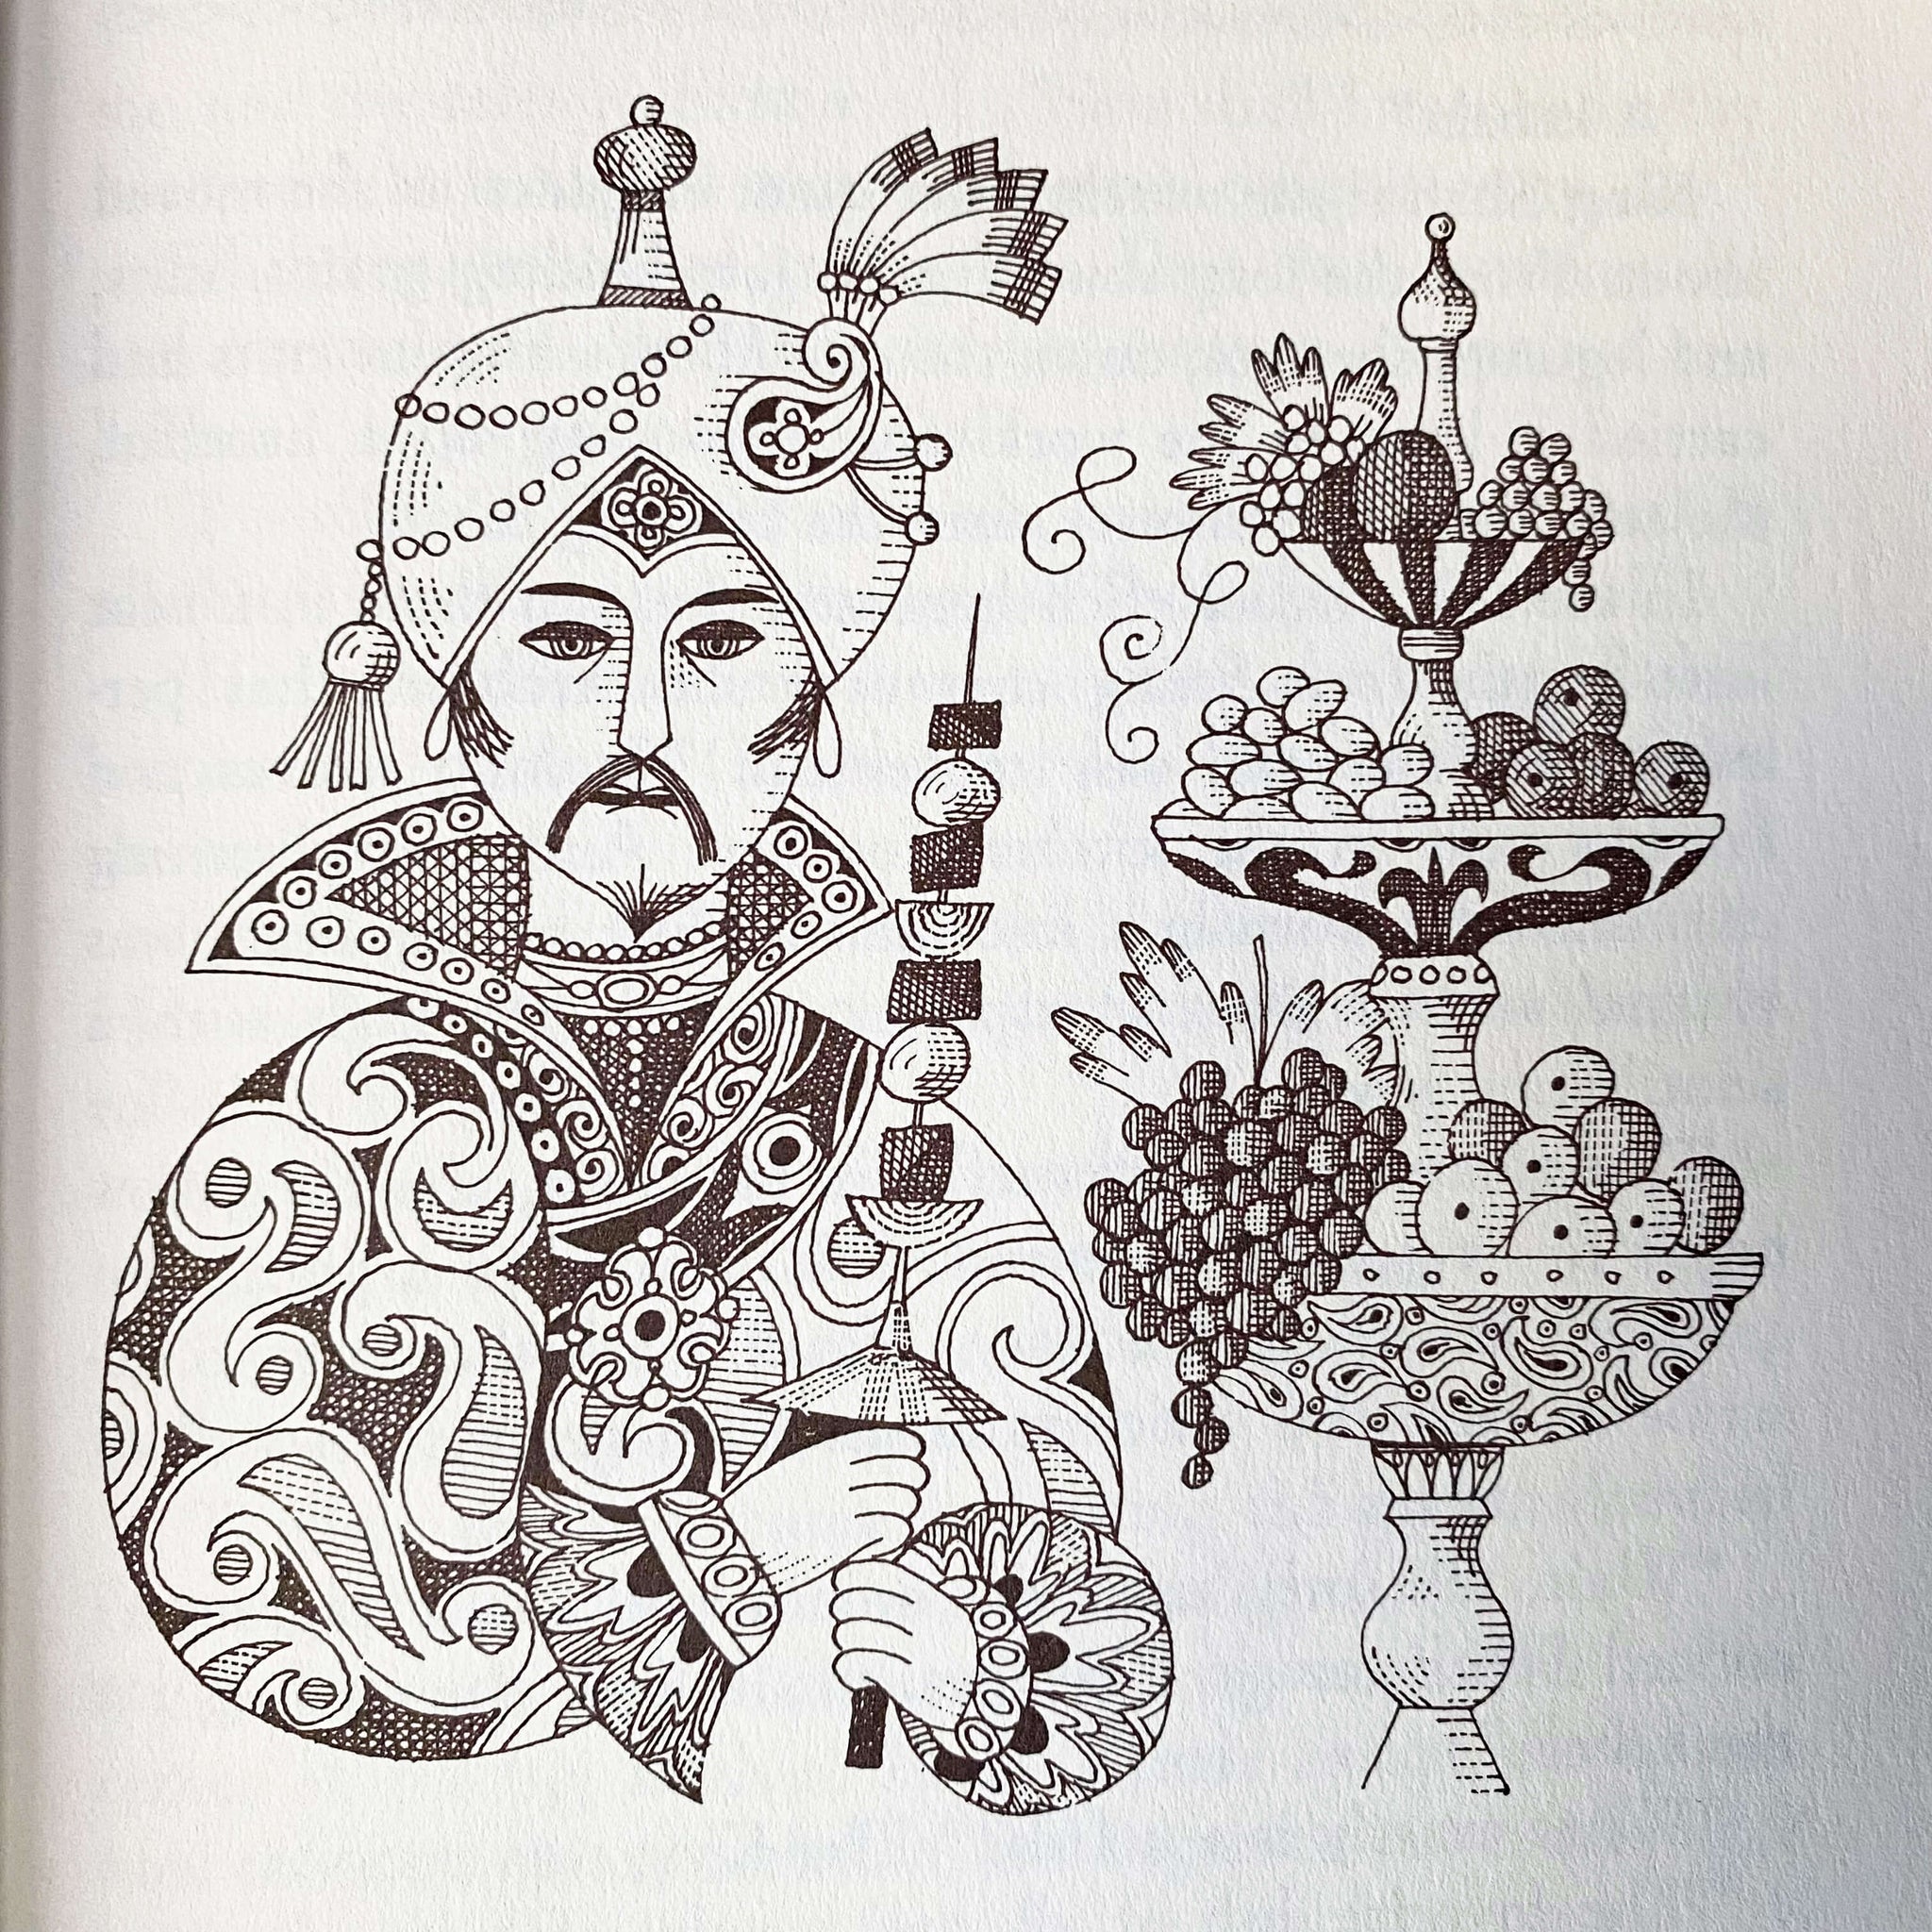 Scheherazade Cooks by Wadeeha Atiyeh - Vintage Middle Eastern Cookbook circa 1960